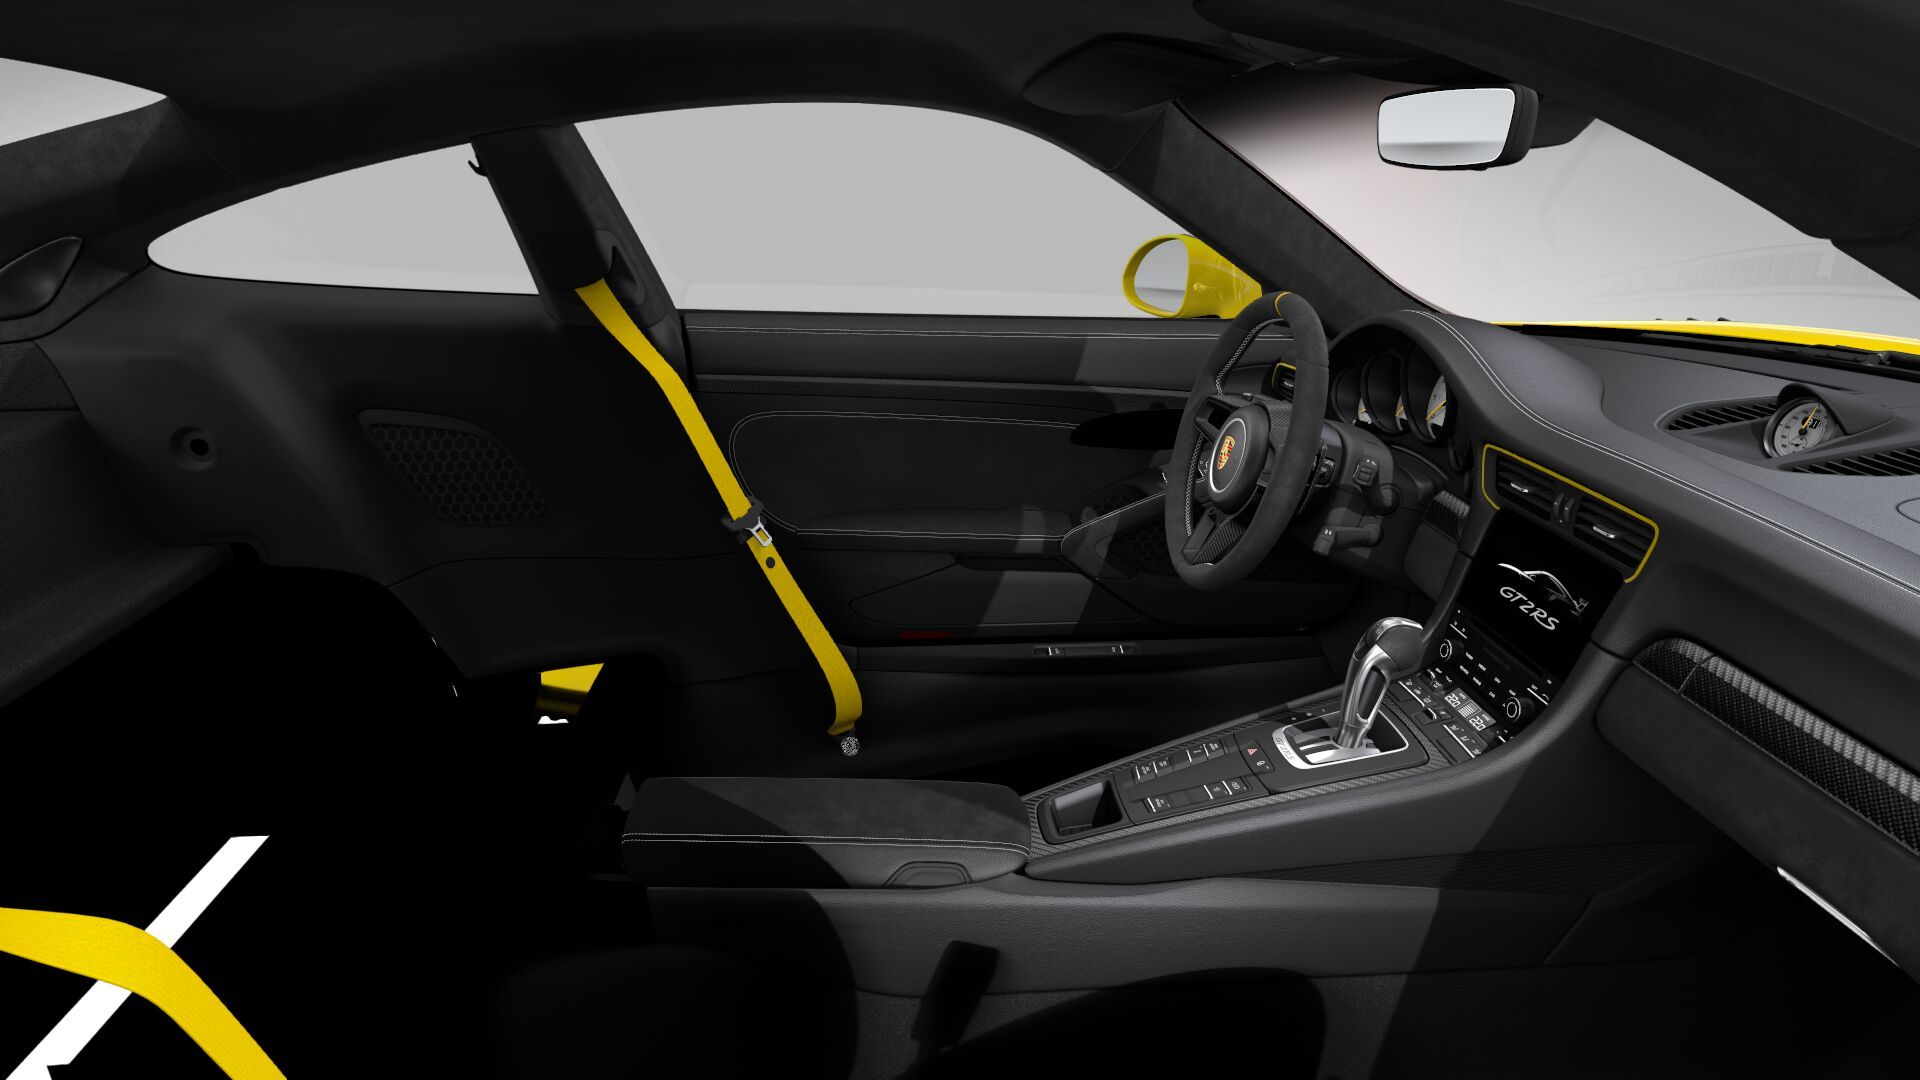 the Porsche 911 GT2 RS has an Exquisite Interior.